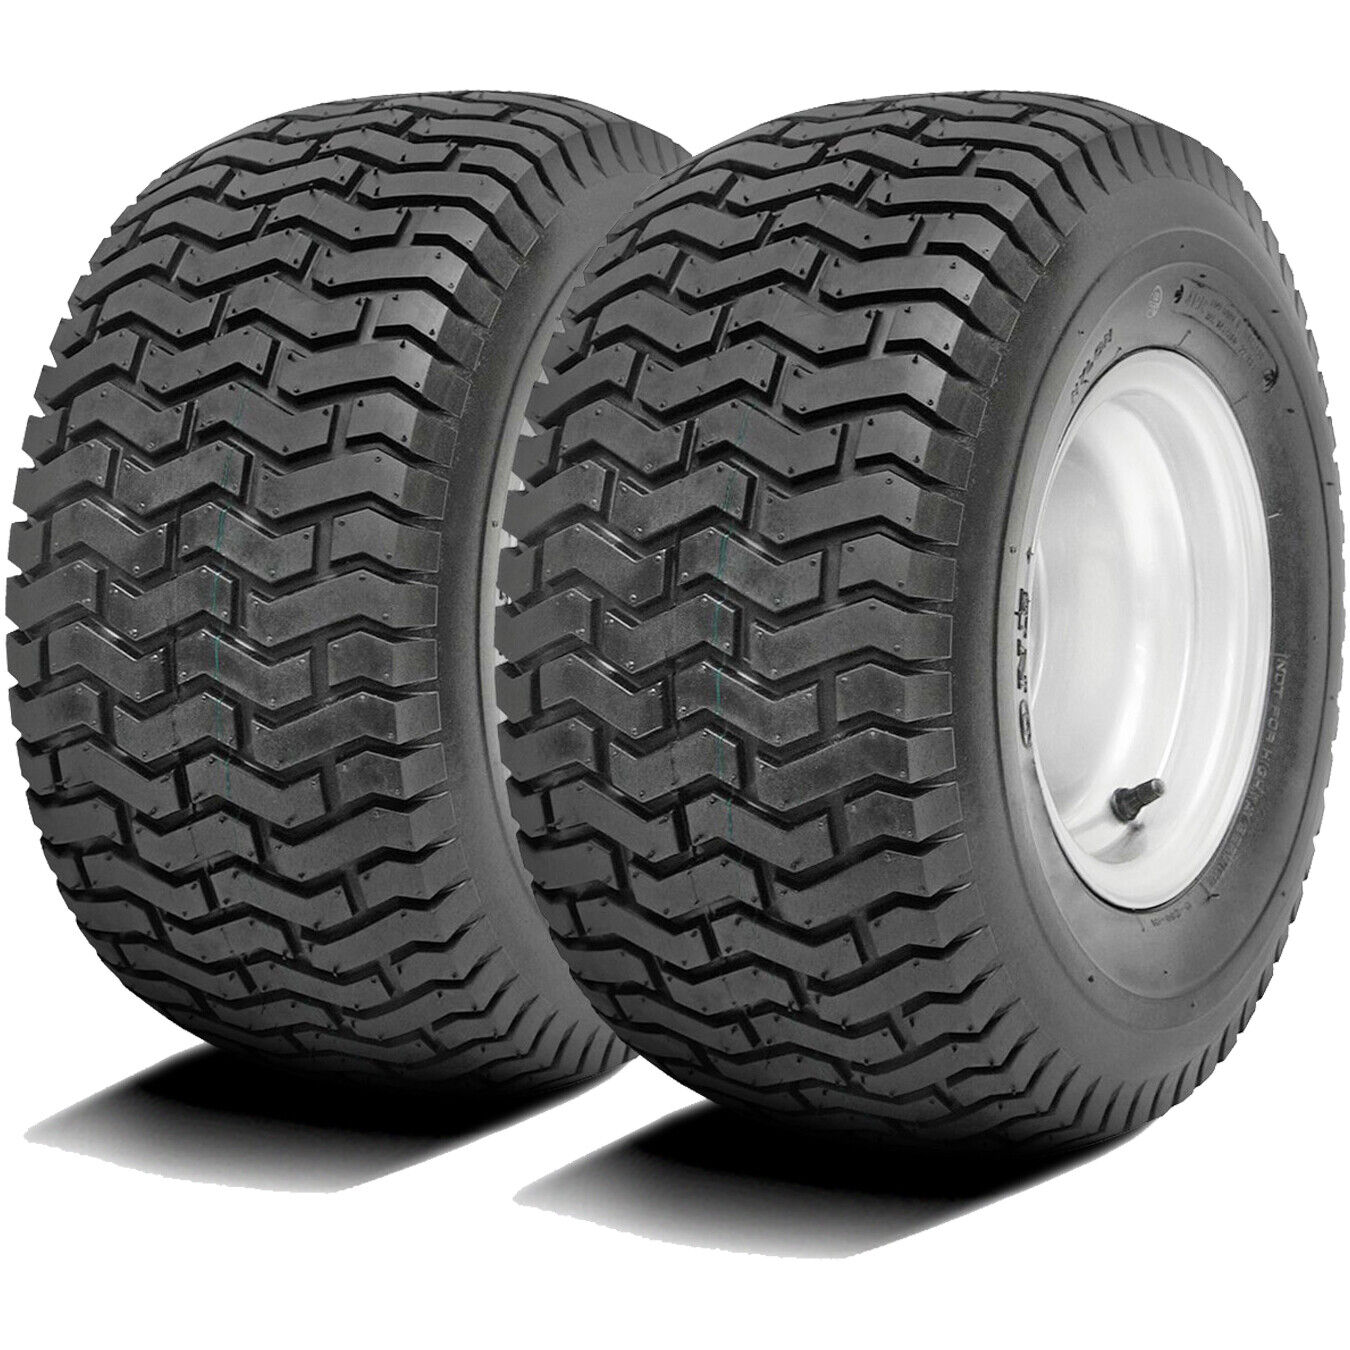 2 Tires Deestone D265 20X8.00-8 79A3 4 Ply DC Lawn & Garden